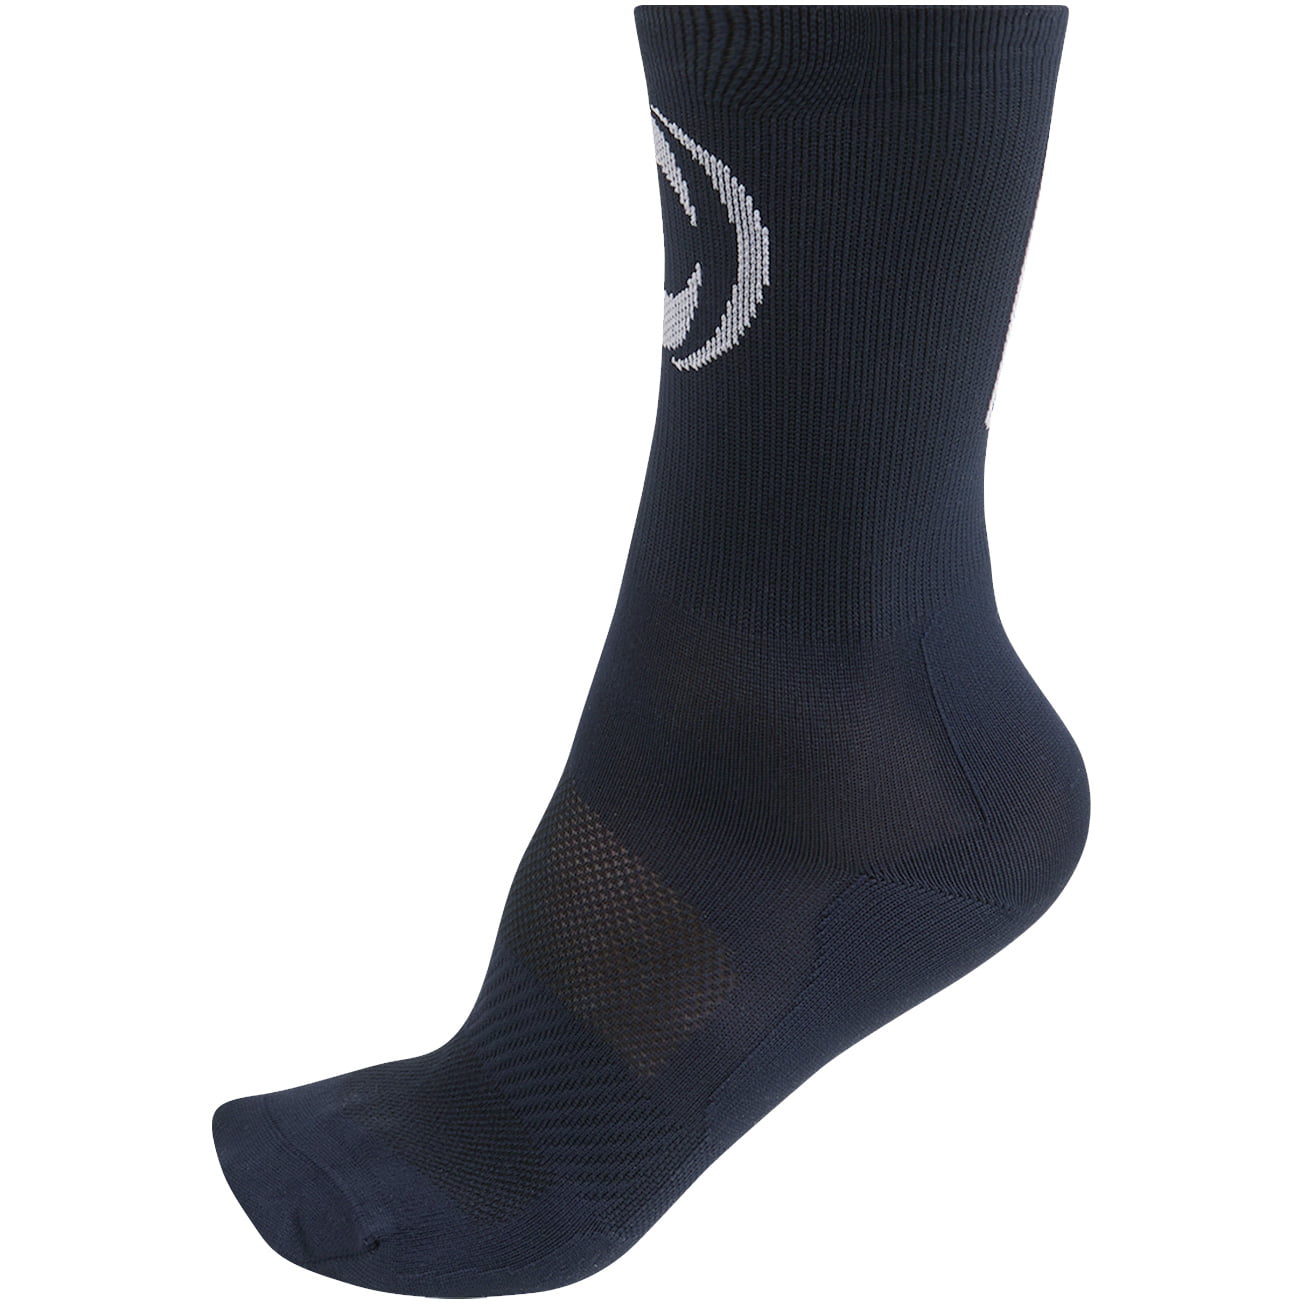 INEOS Grenadiers 2023 Cycling Socks, for men, size XL, MTB socks, Cycling clothes